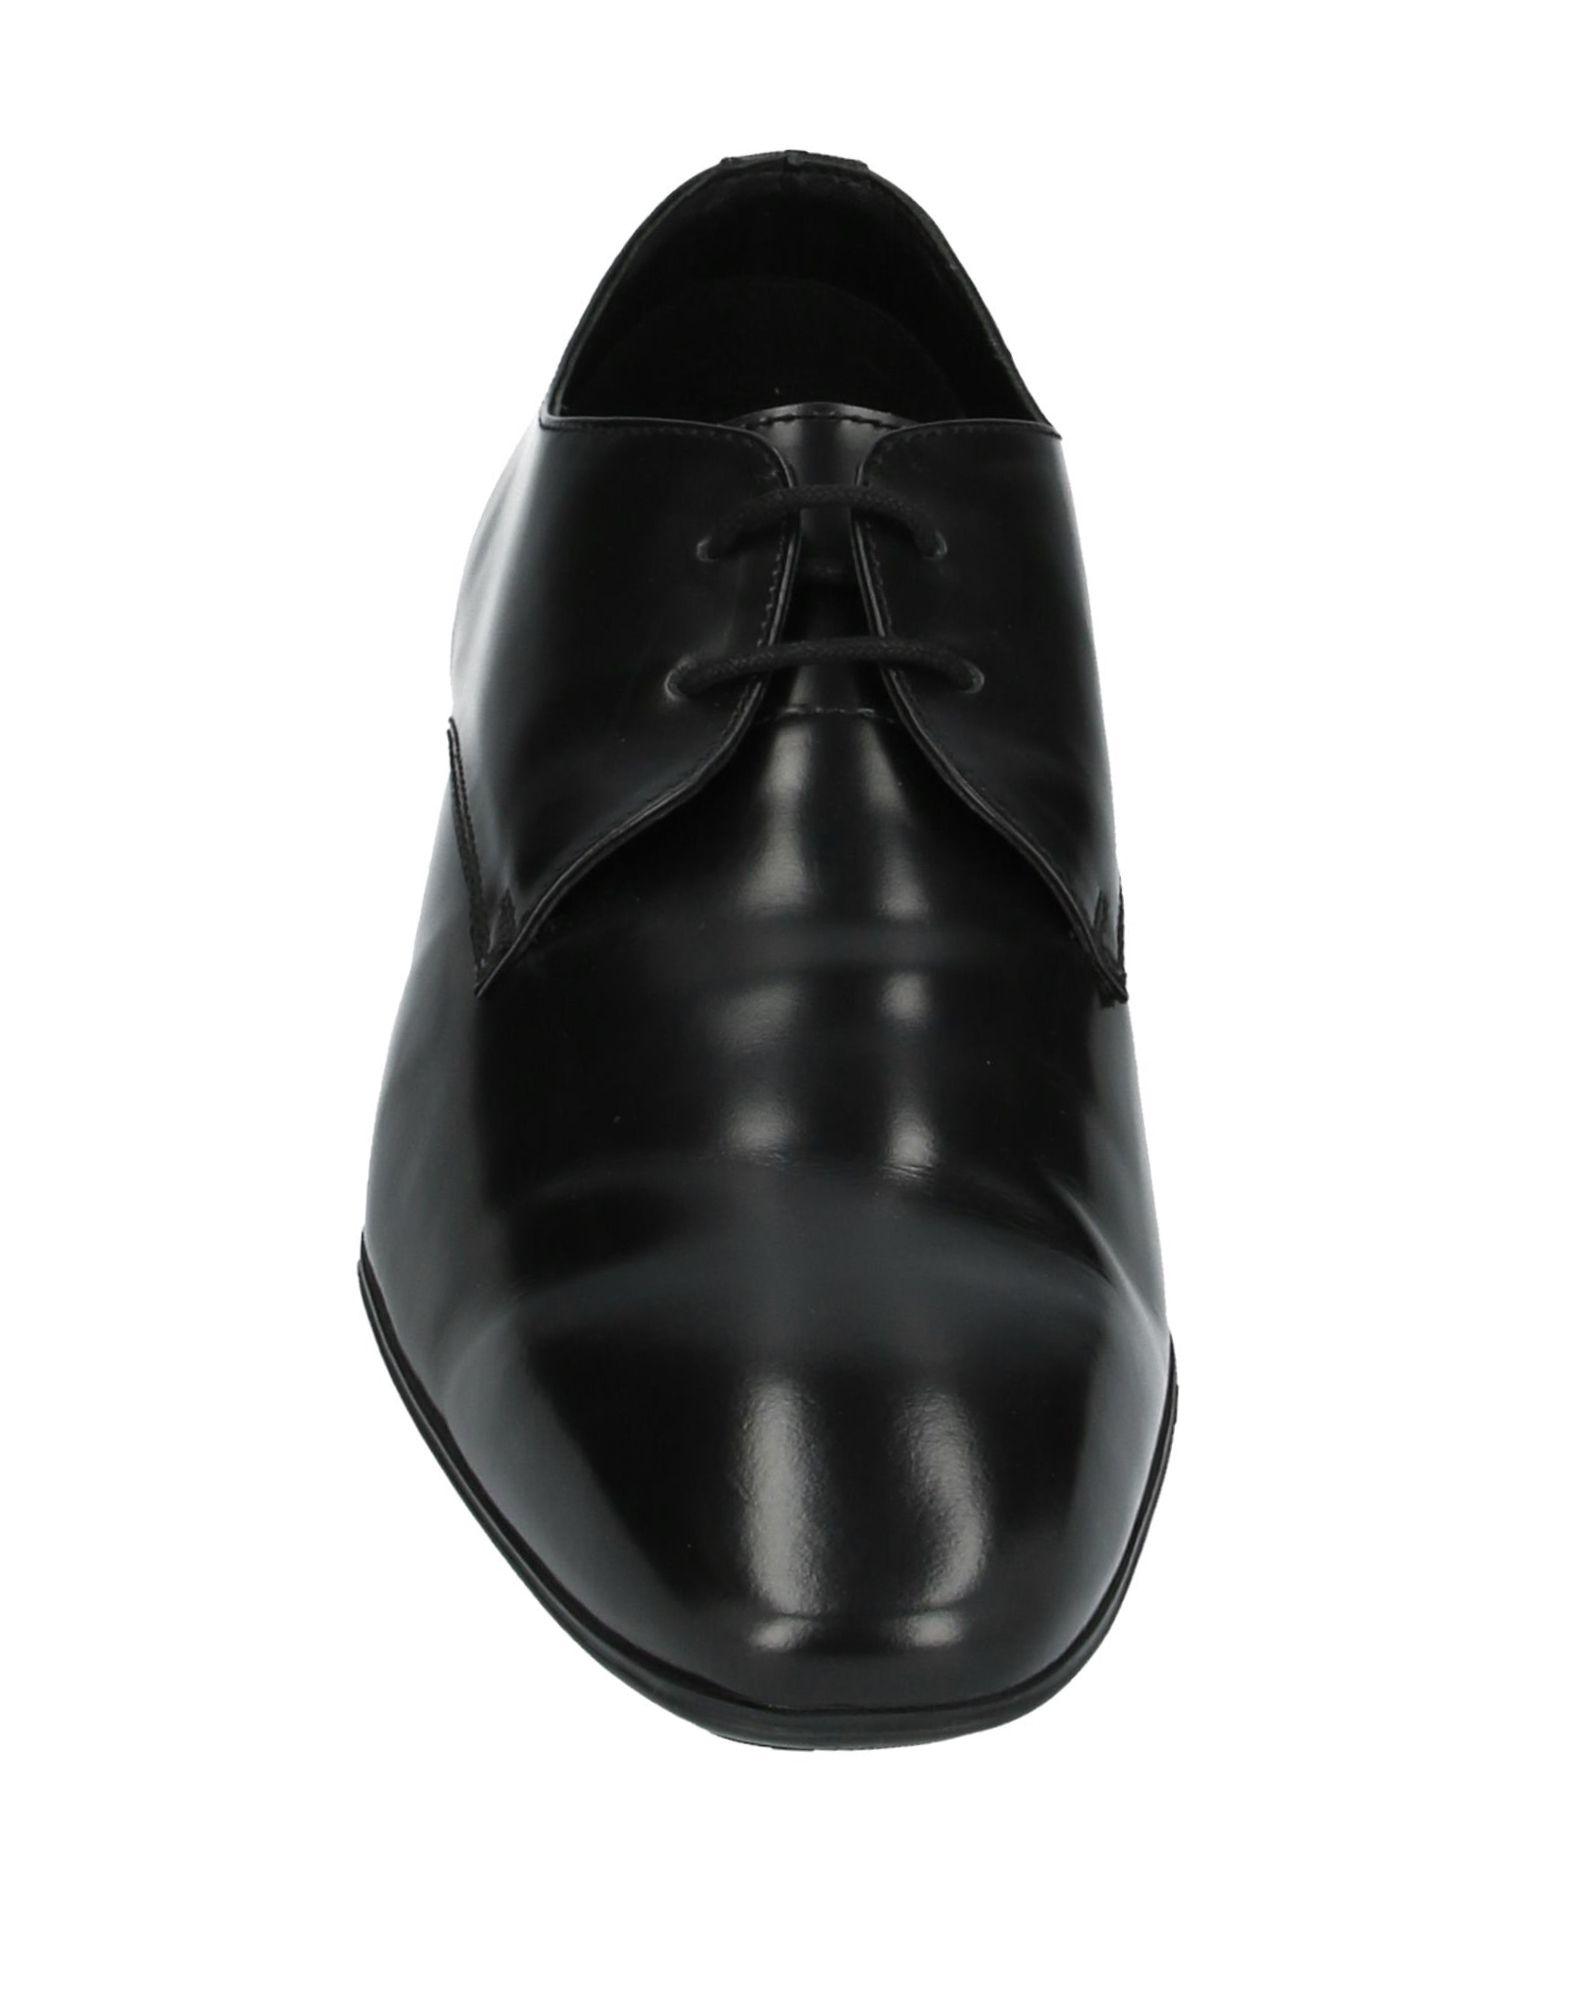 Antony Morato Lace-up Shoe in Black for Men - Lyst